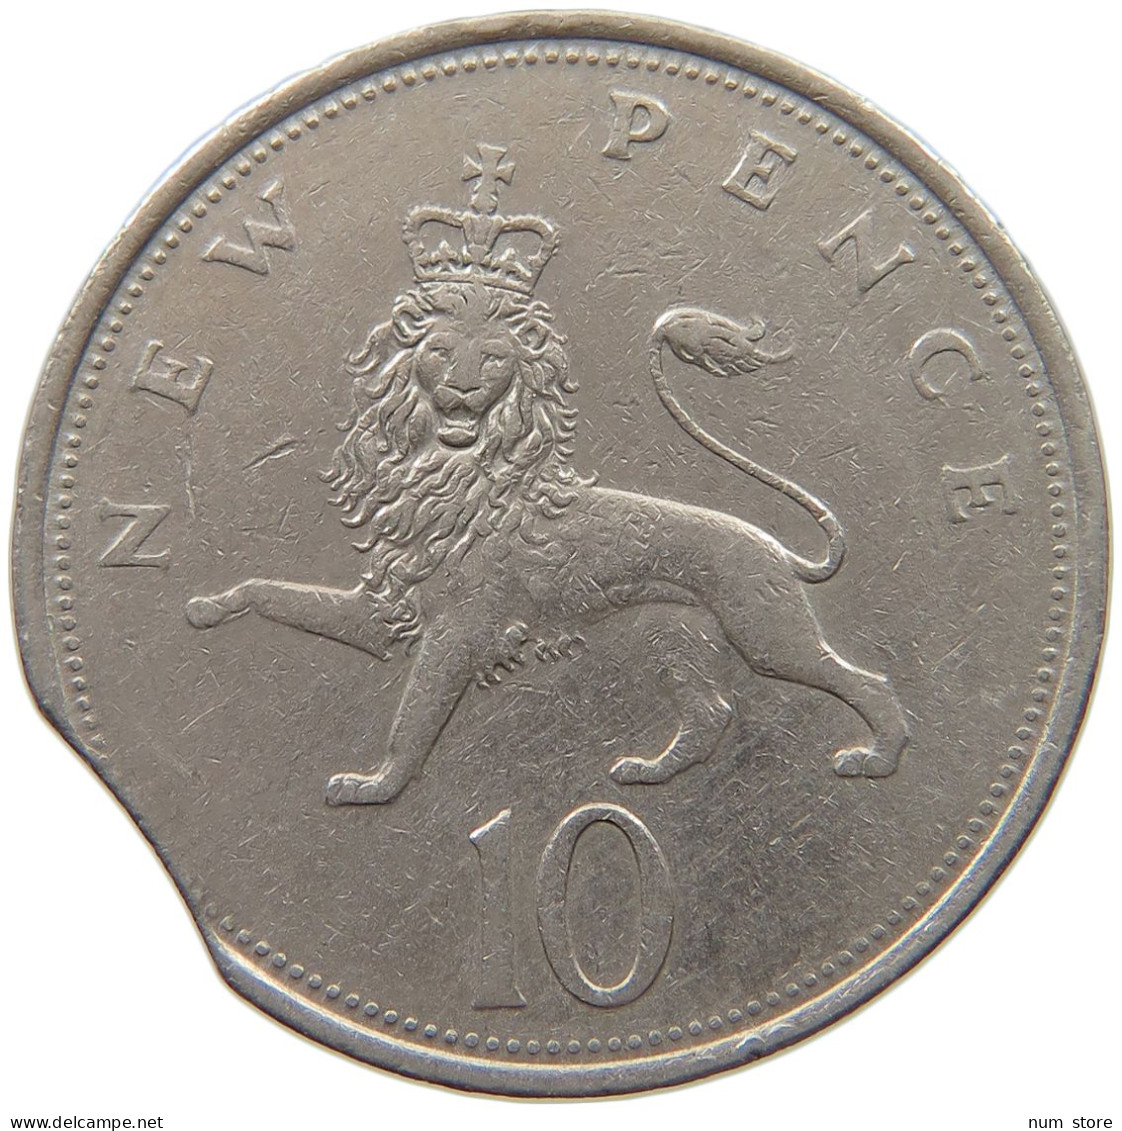 GREAT BRITAIN 10 PENCE 1968 Elisabeth II. (1952-) MINTING ERROR #c029 0101 - 10 Pence & 10 New Pence